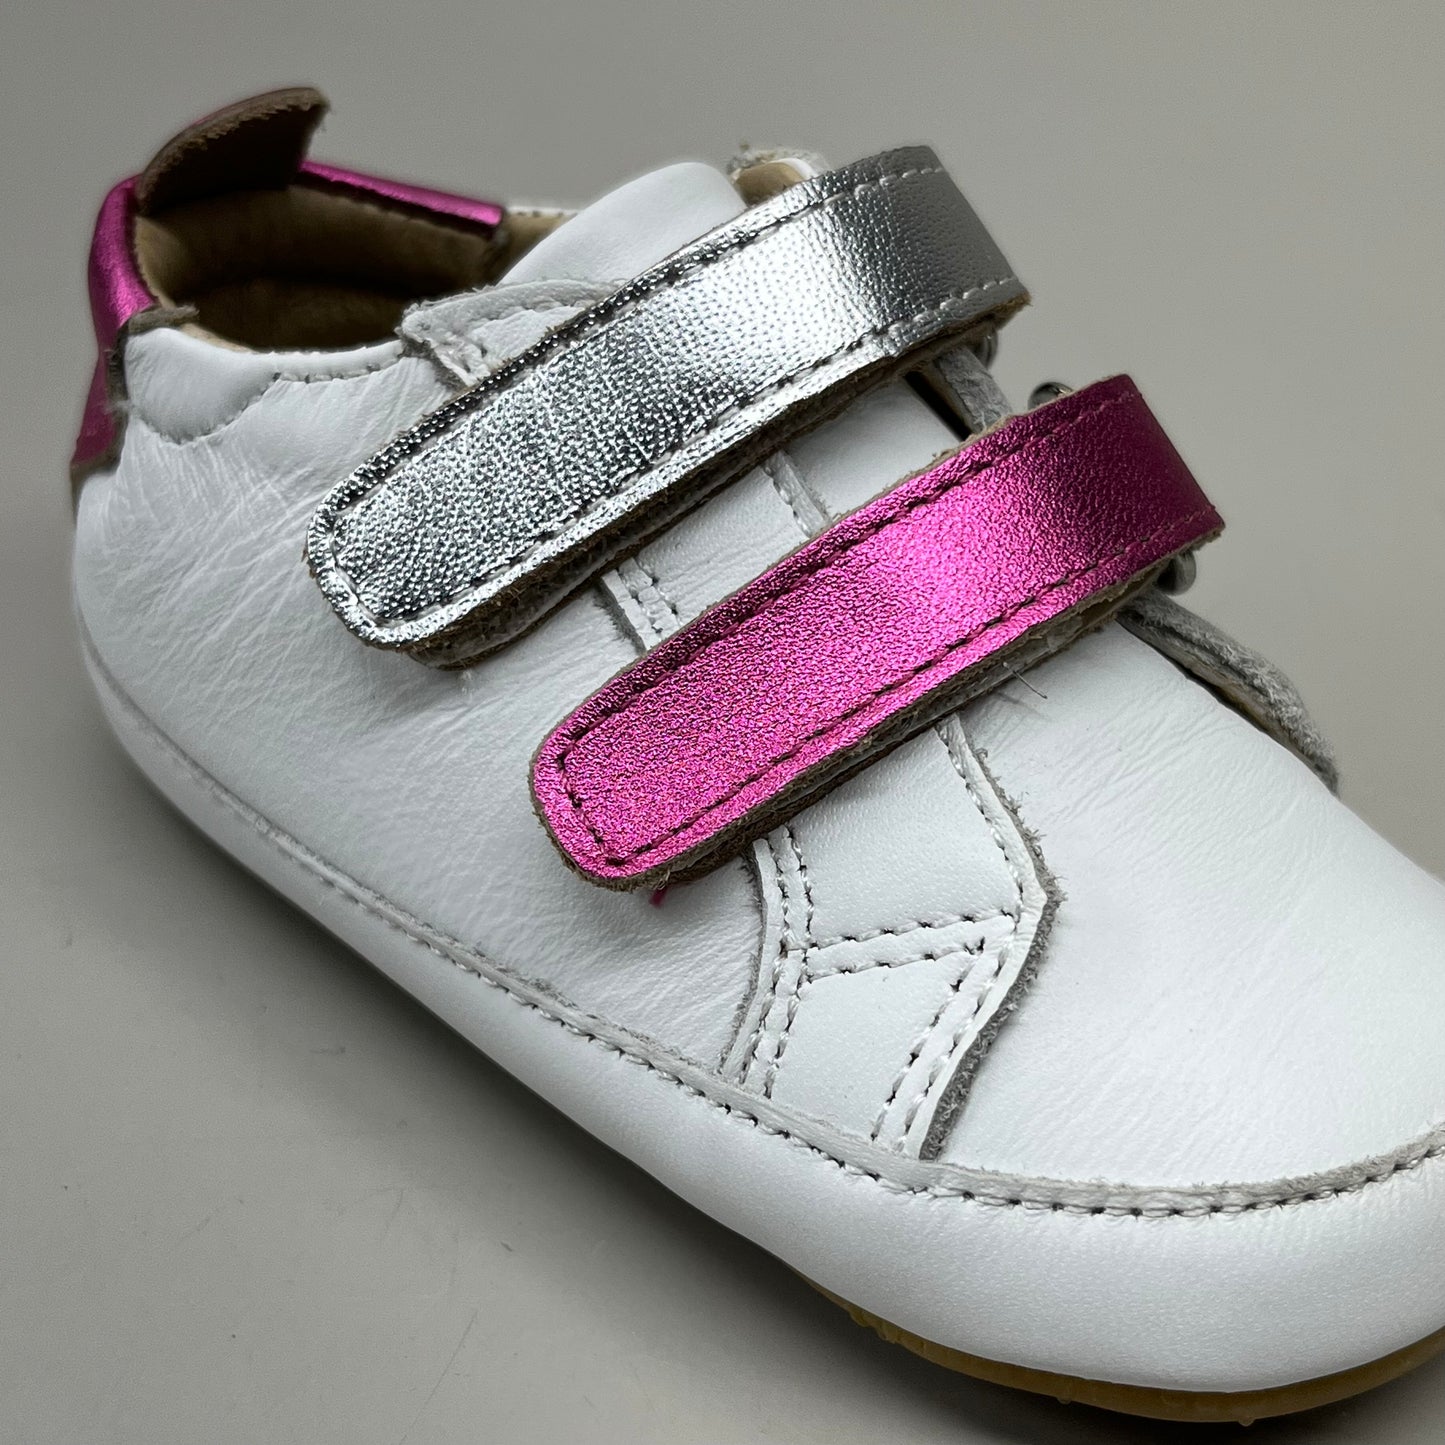 OLD SOLES Baby 2 Straps Leather Shoe Sz 5 EU 21 Snow/Fuchsia Foil/Silver #0060R